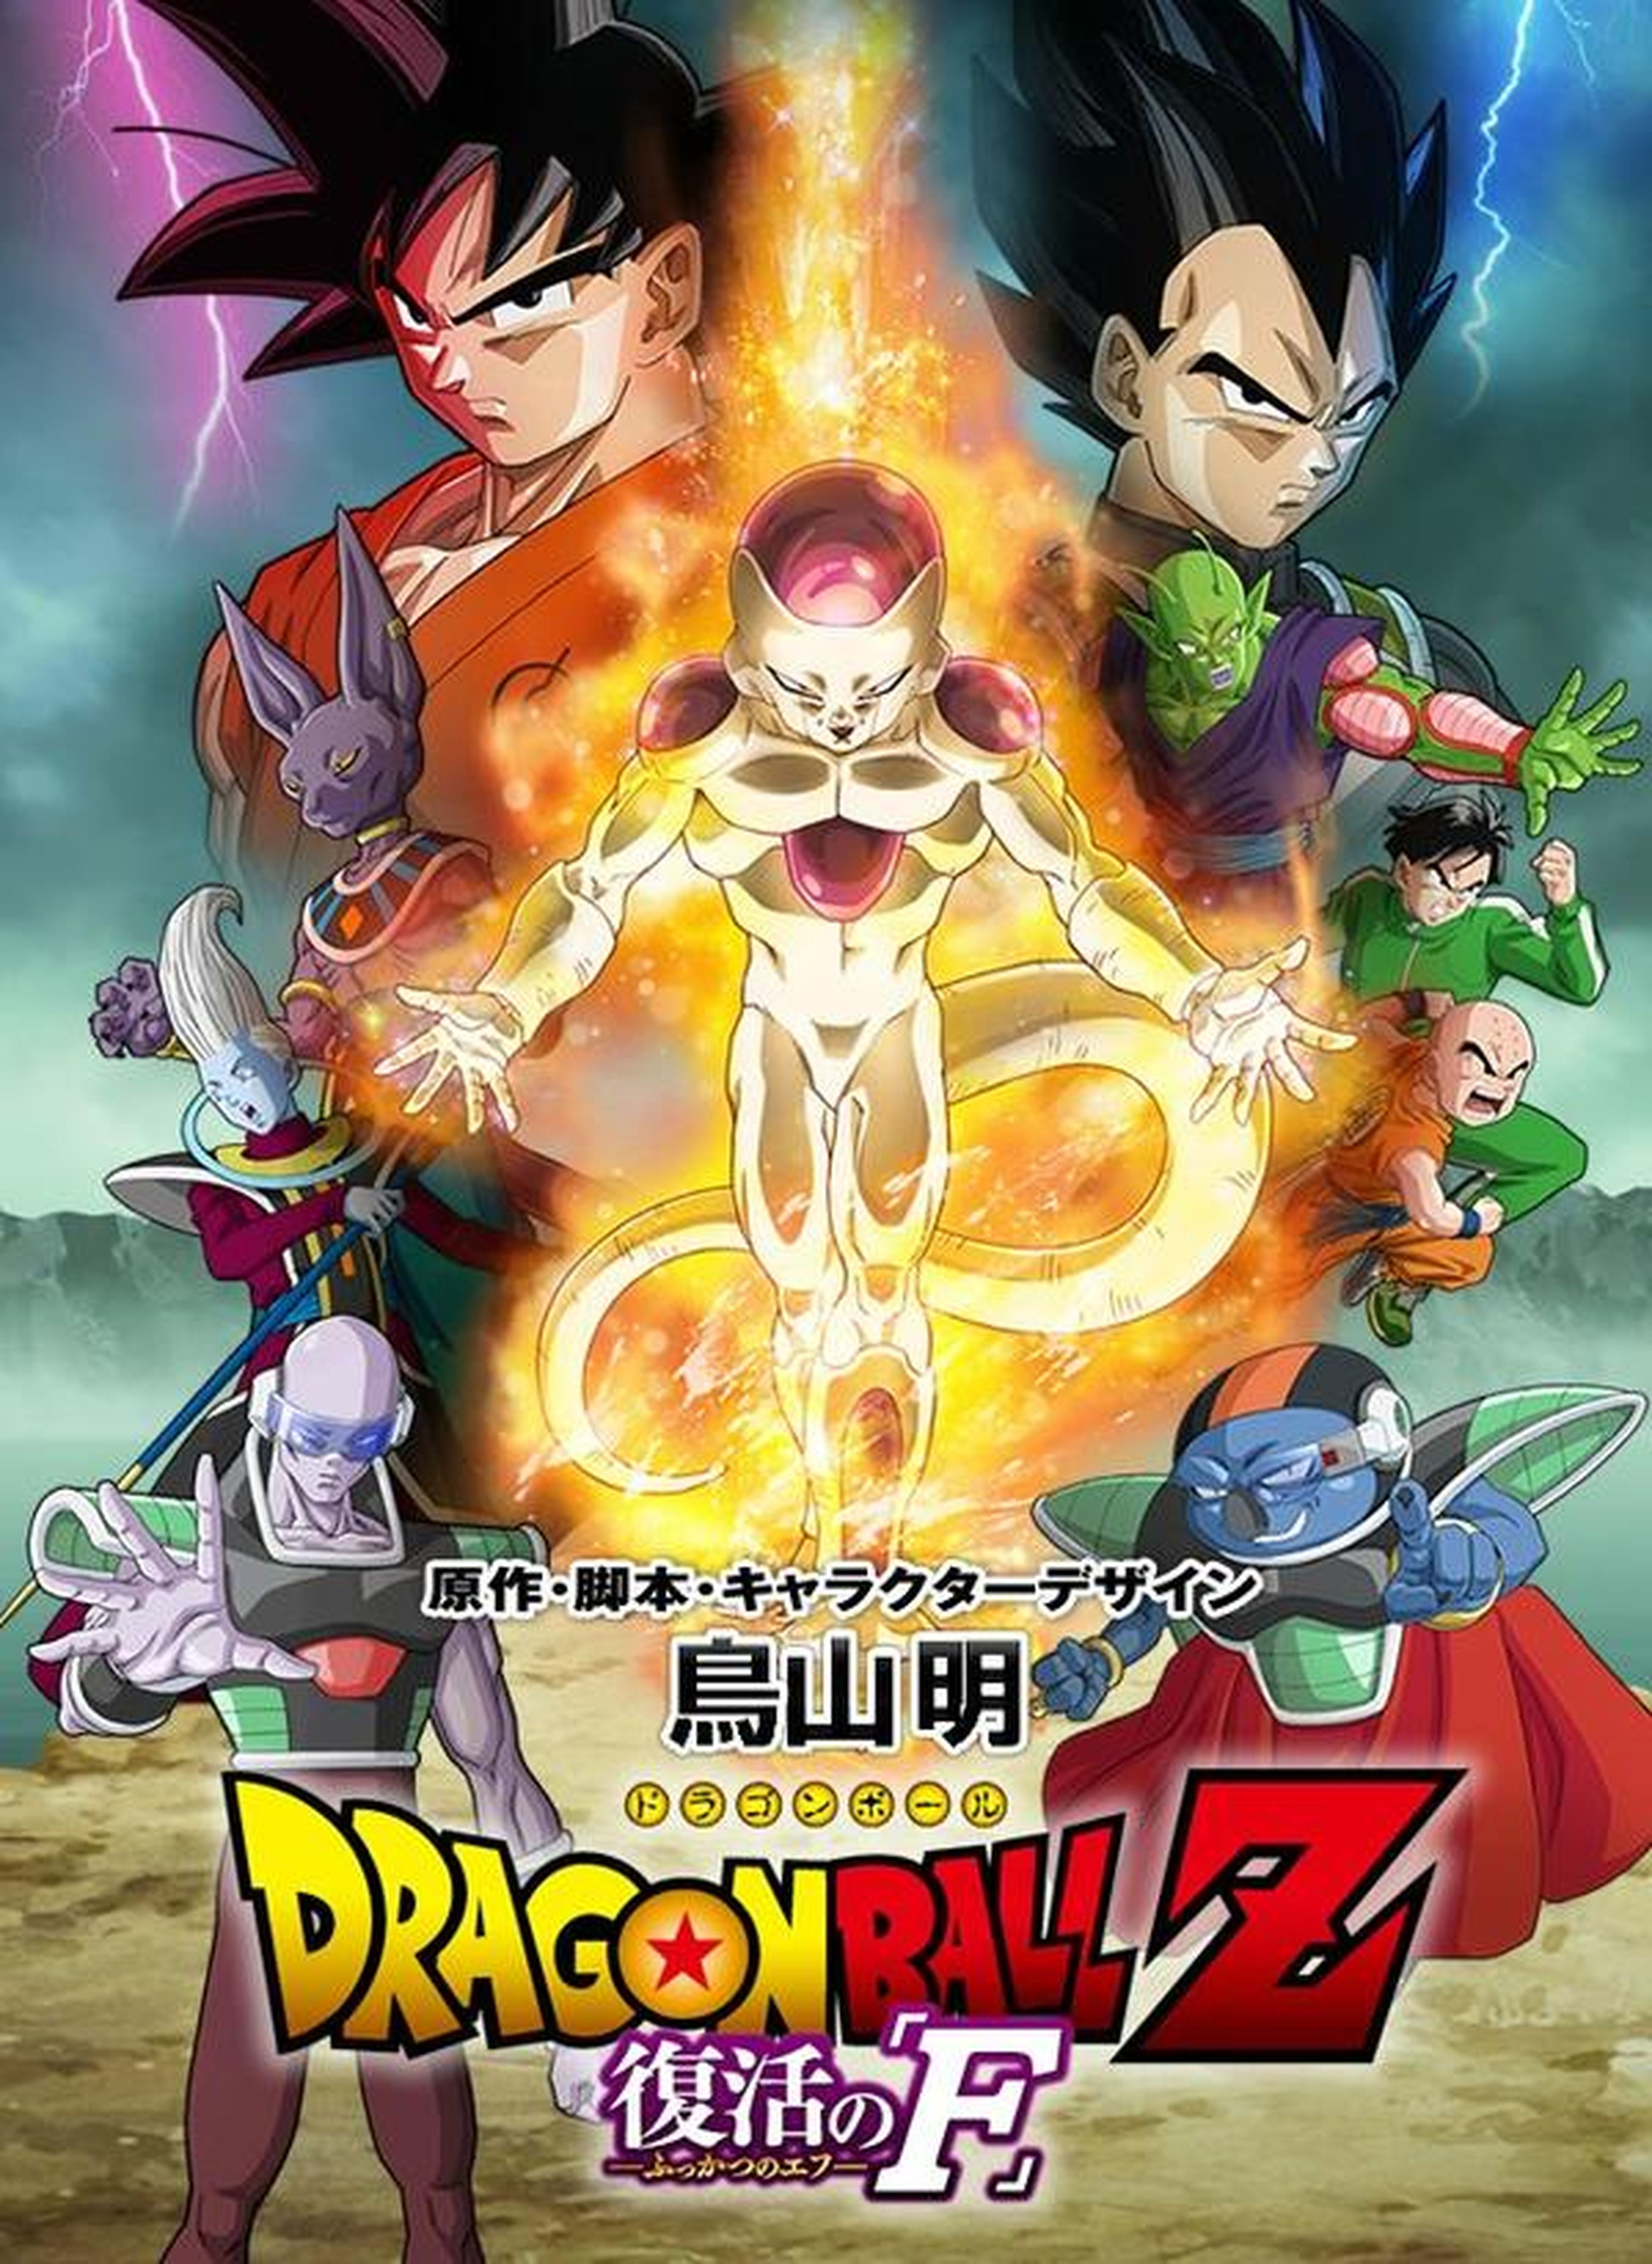 ¡Dragon Ball Z Fukkatsu no F se estrenará en España en noviembre!